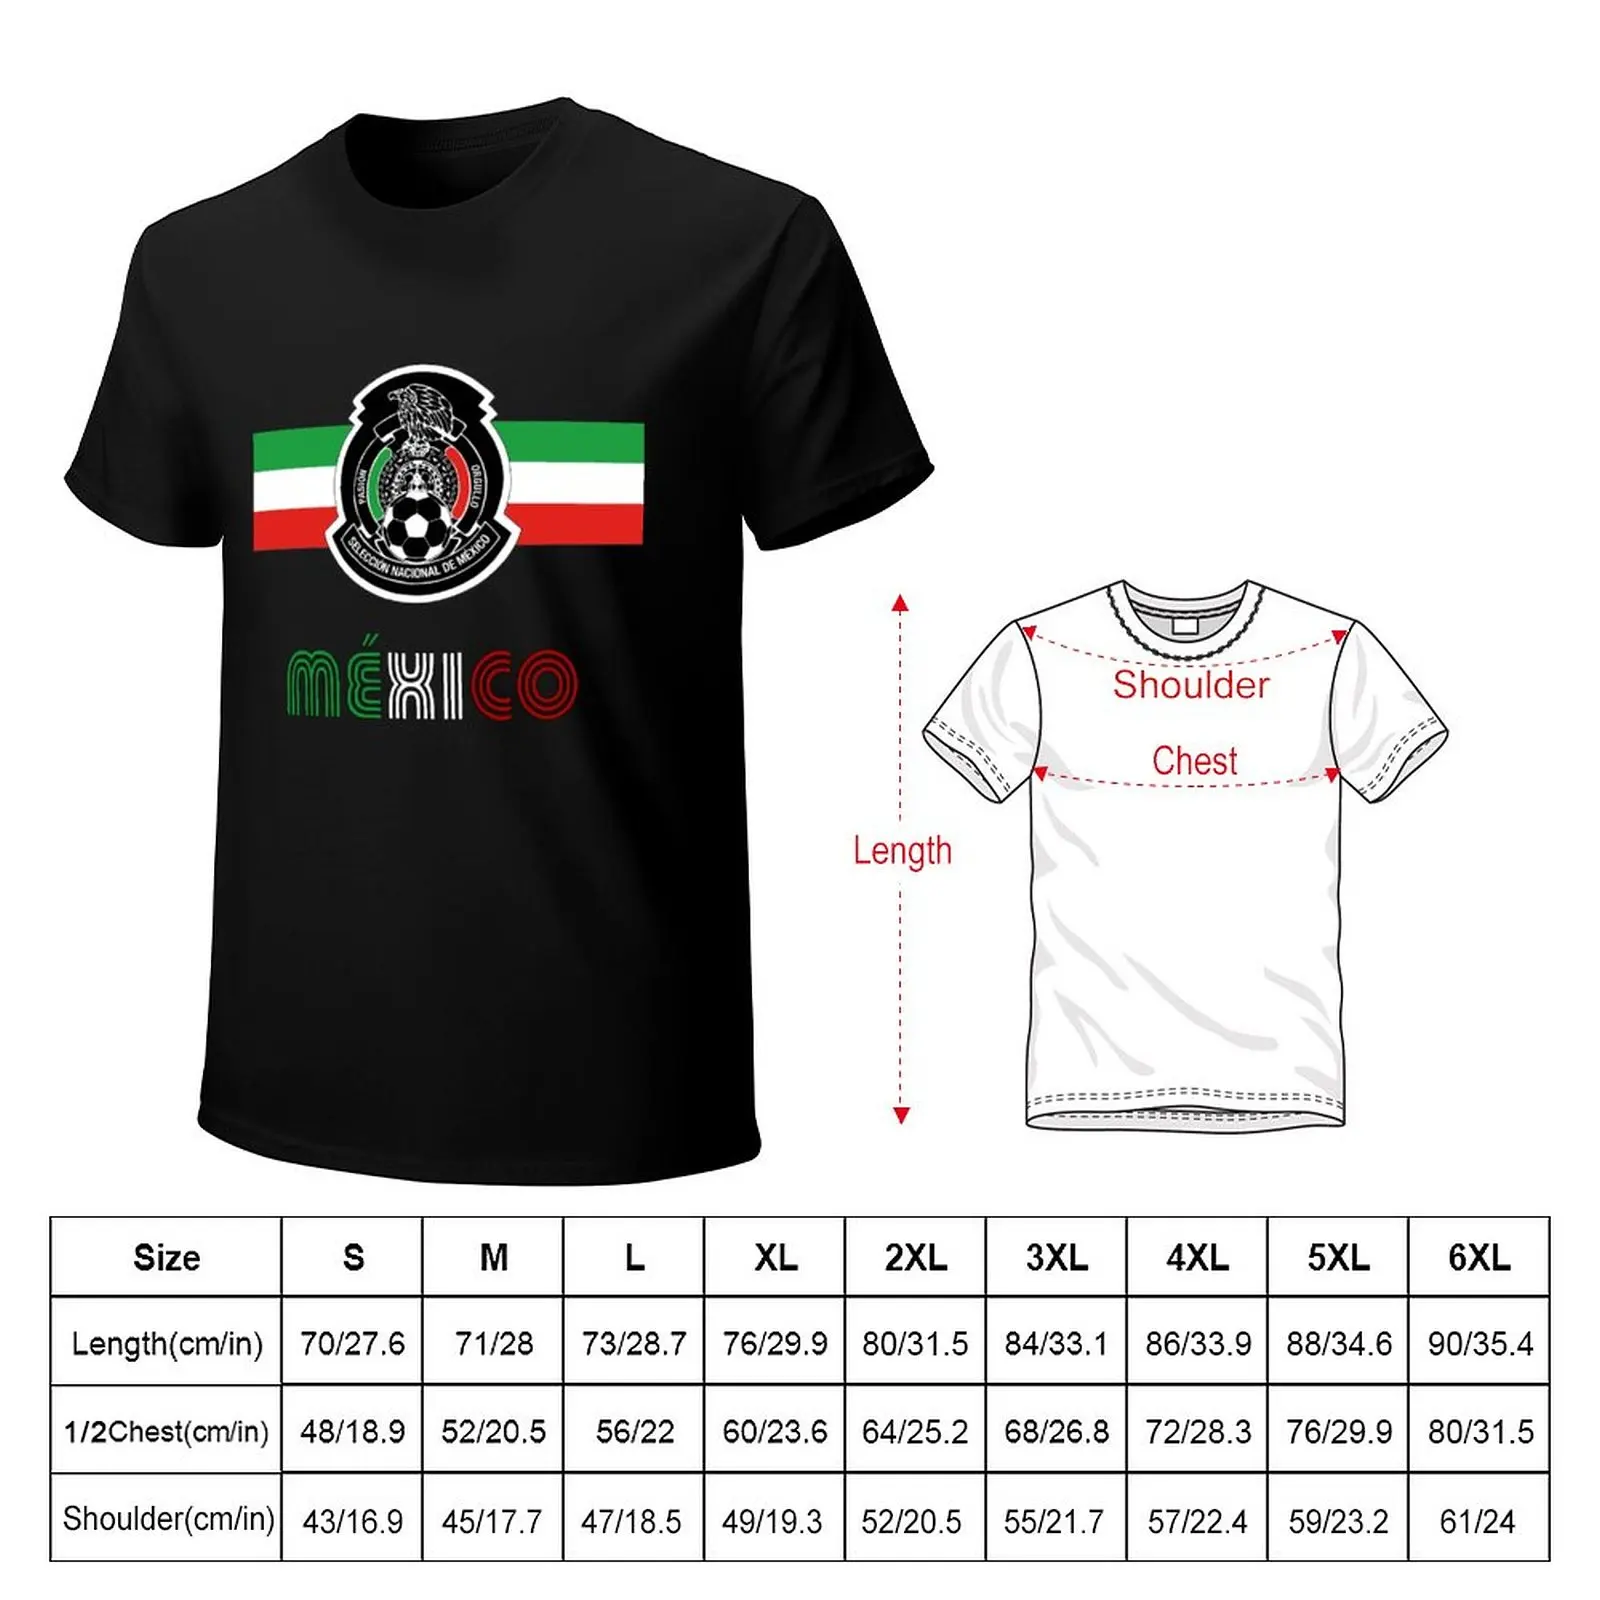 New Playera Tuzos del Pachuca Campeones 2022 Futbol Mexicano T-Shirt blank  t shirts custom t shirts mens plain t shirts - AliExpress